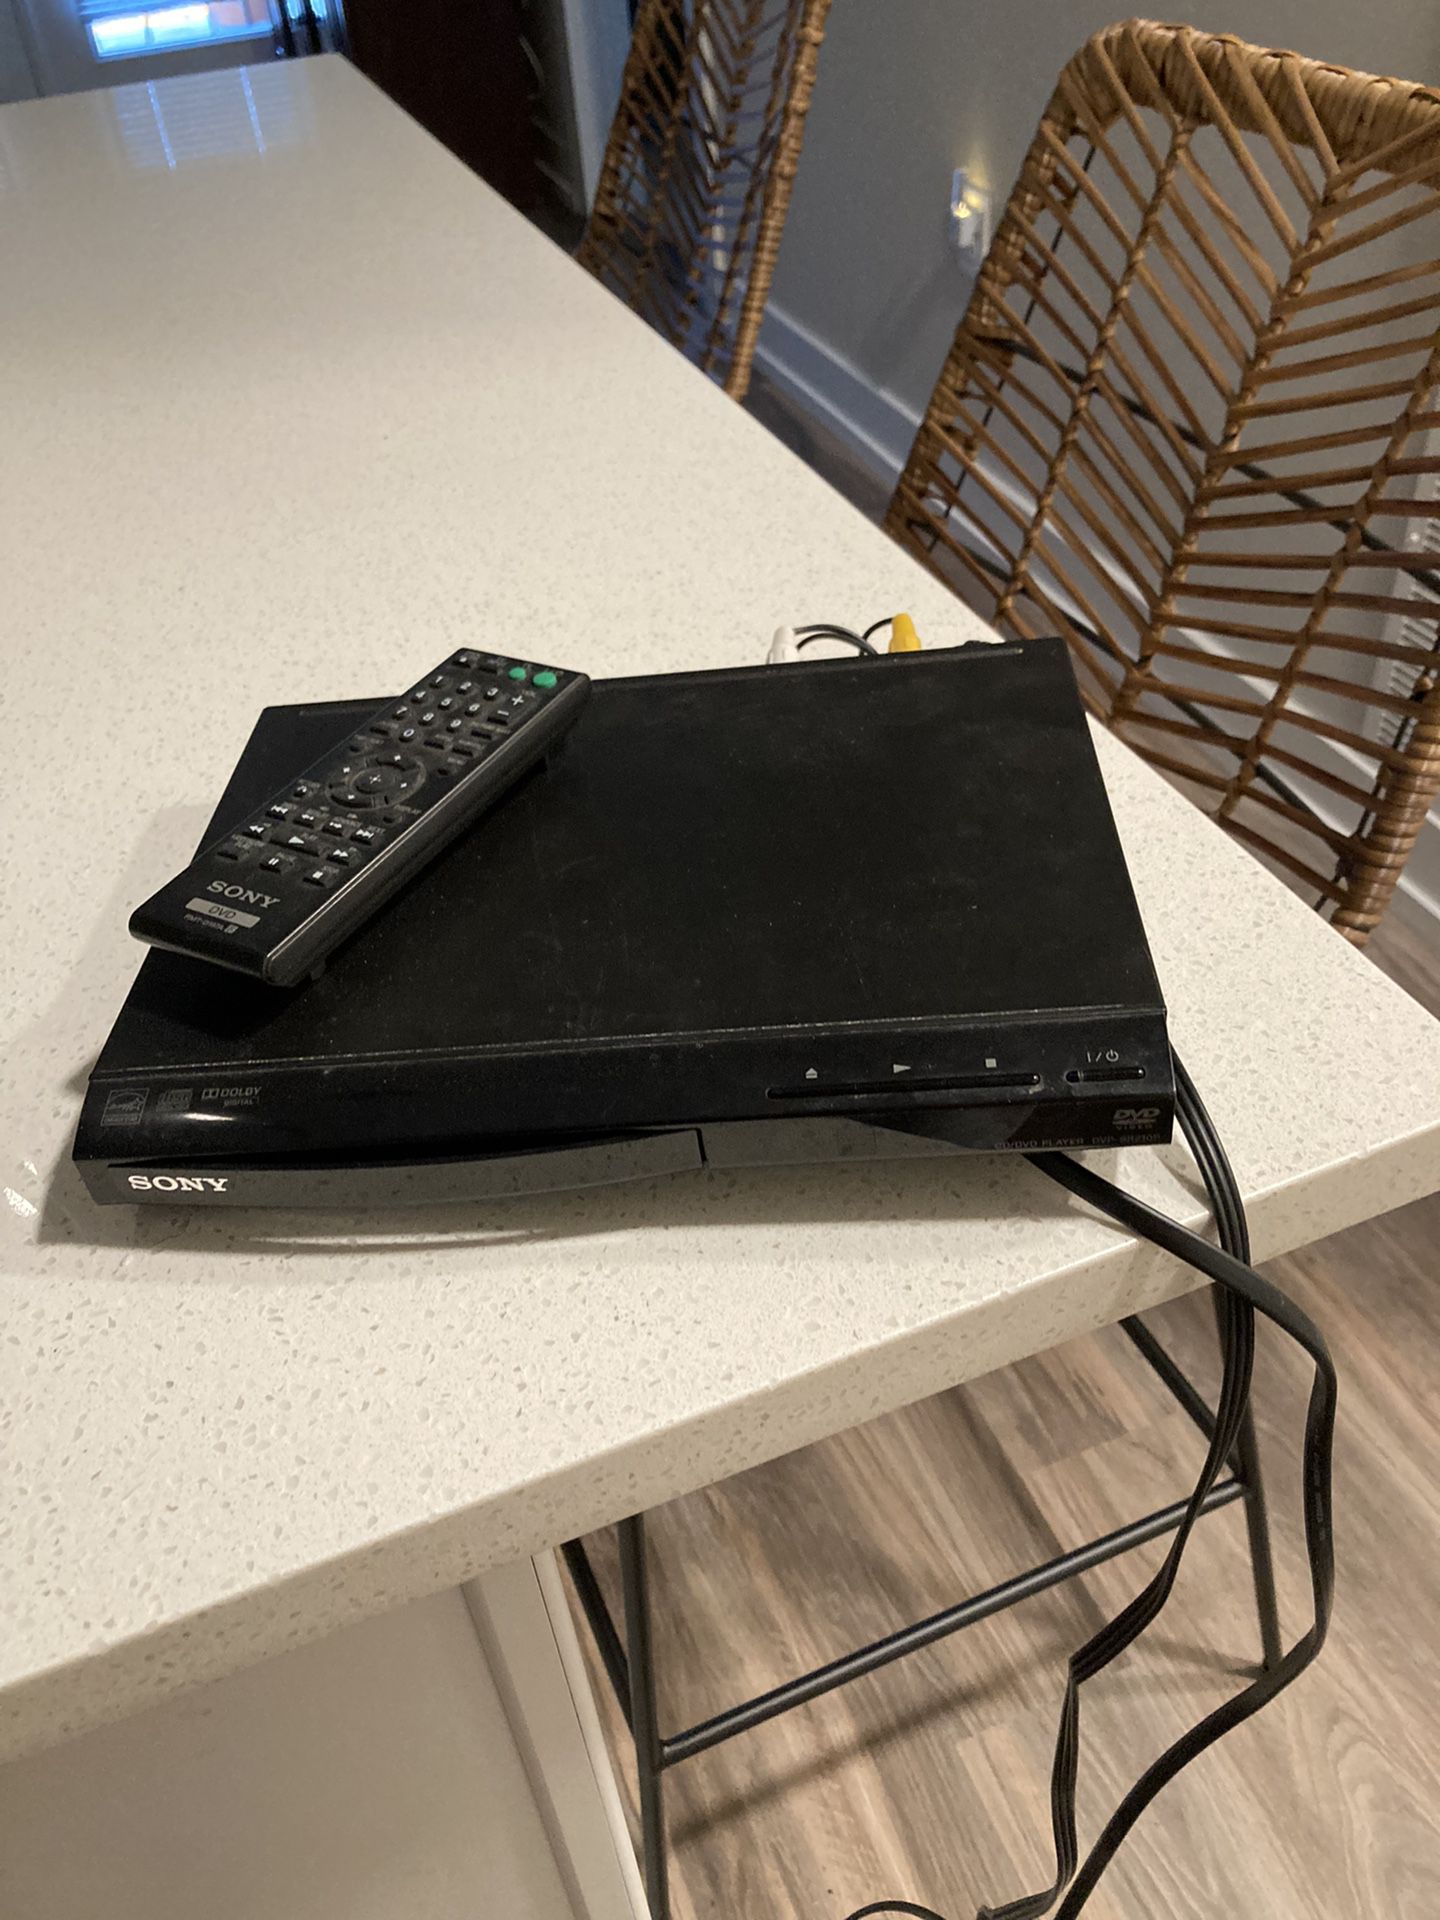 Sony Dvp-sr210P dvd player with remote